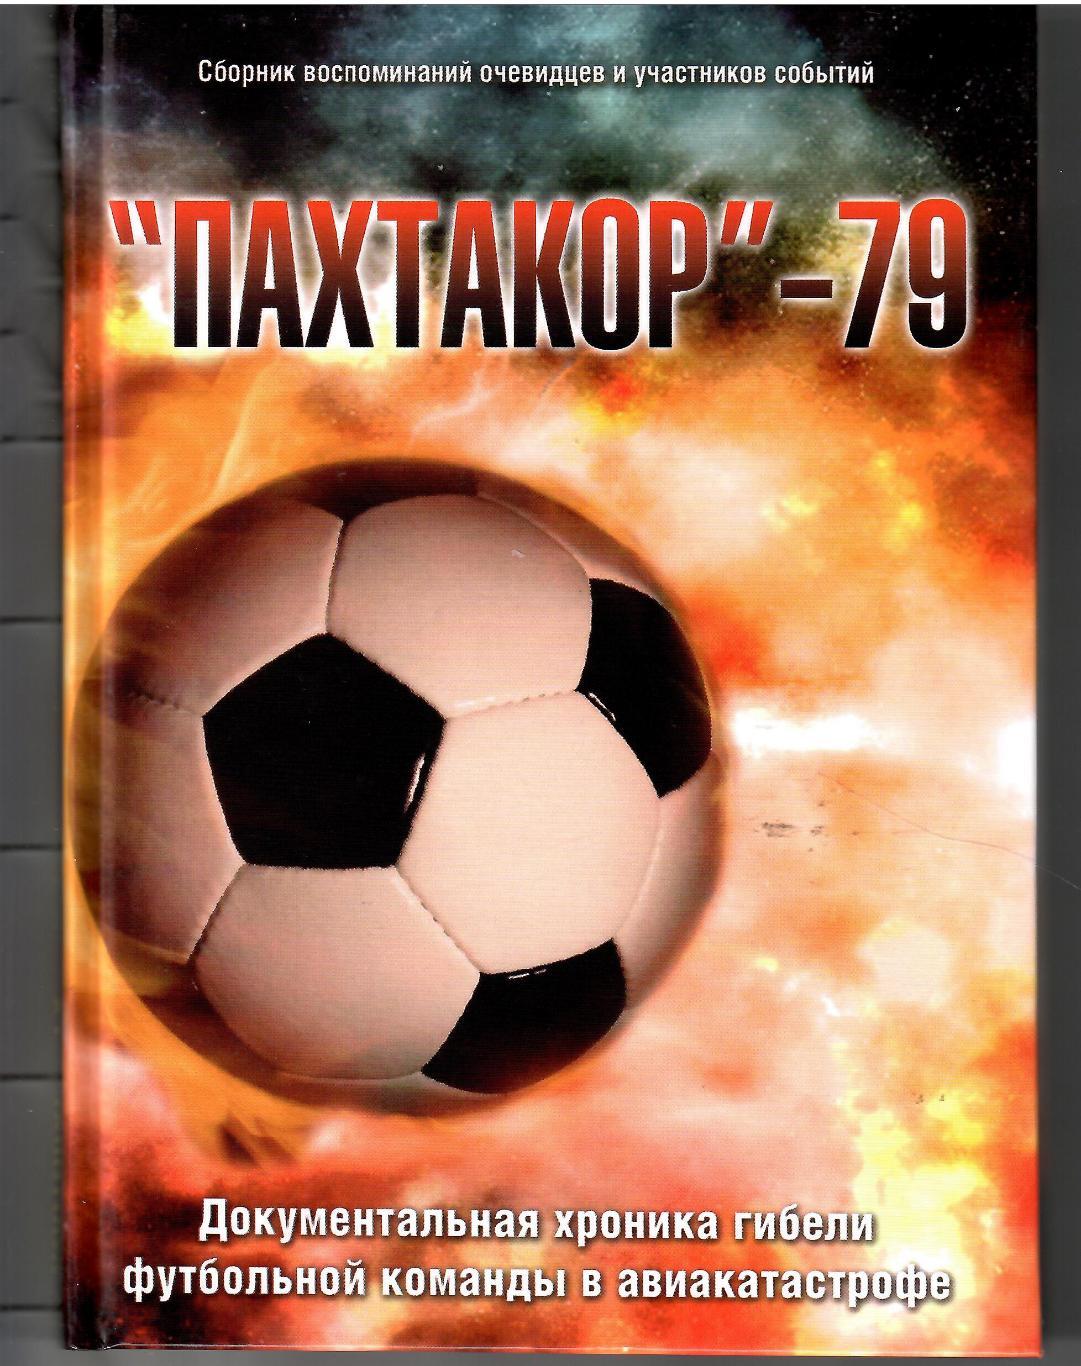 2004 ПАХТАКОР-79 Издательство Санжар Москва 192 стр